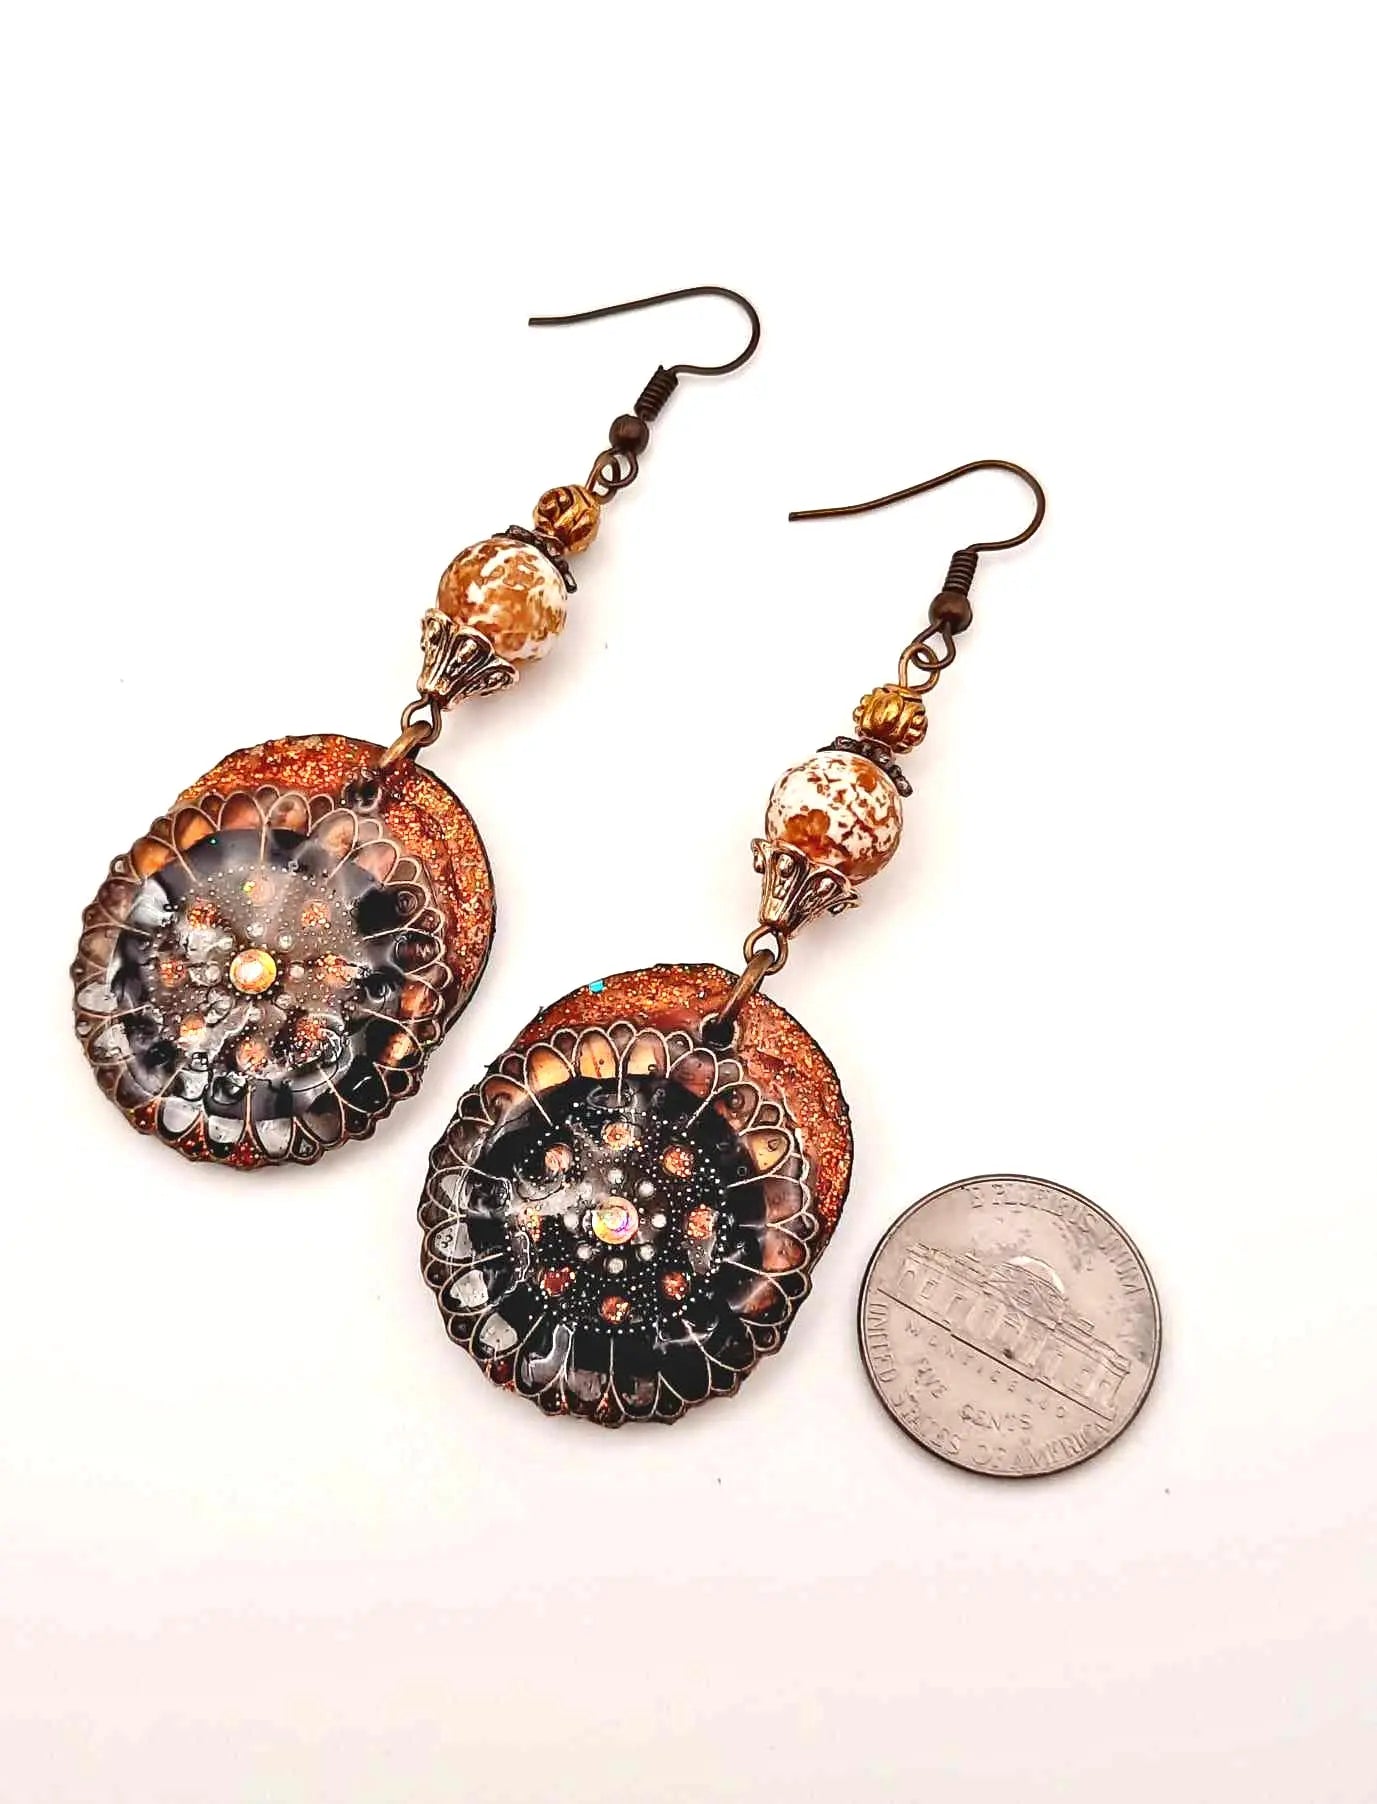 Boho handcrafted earrings with glass bead earrings - Image #2